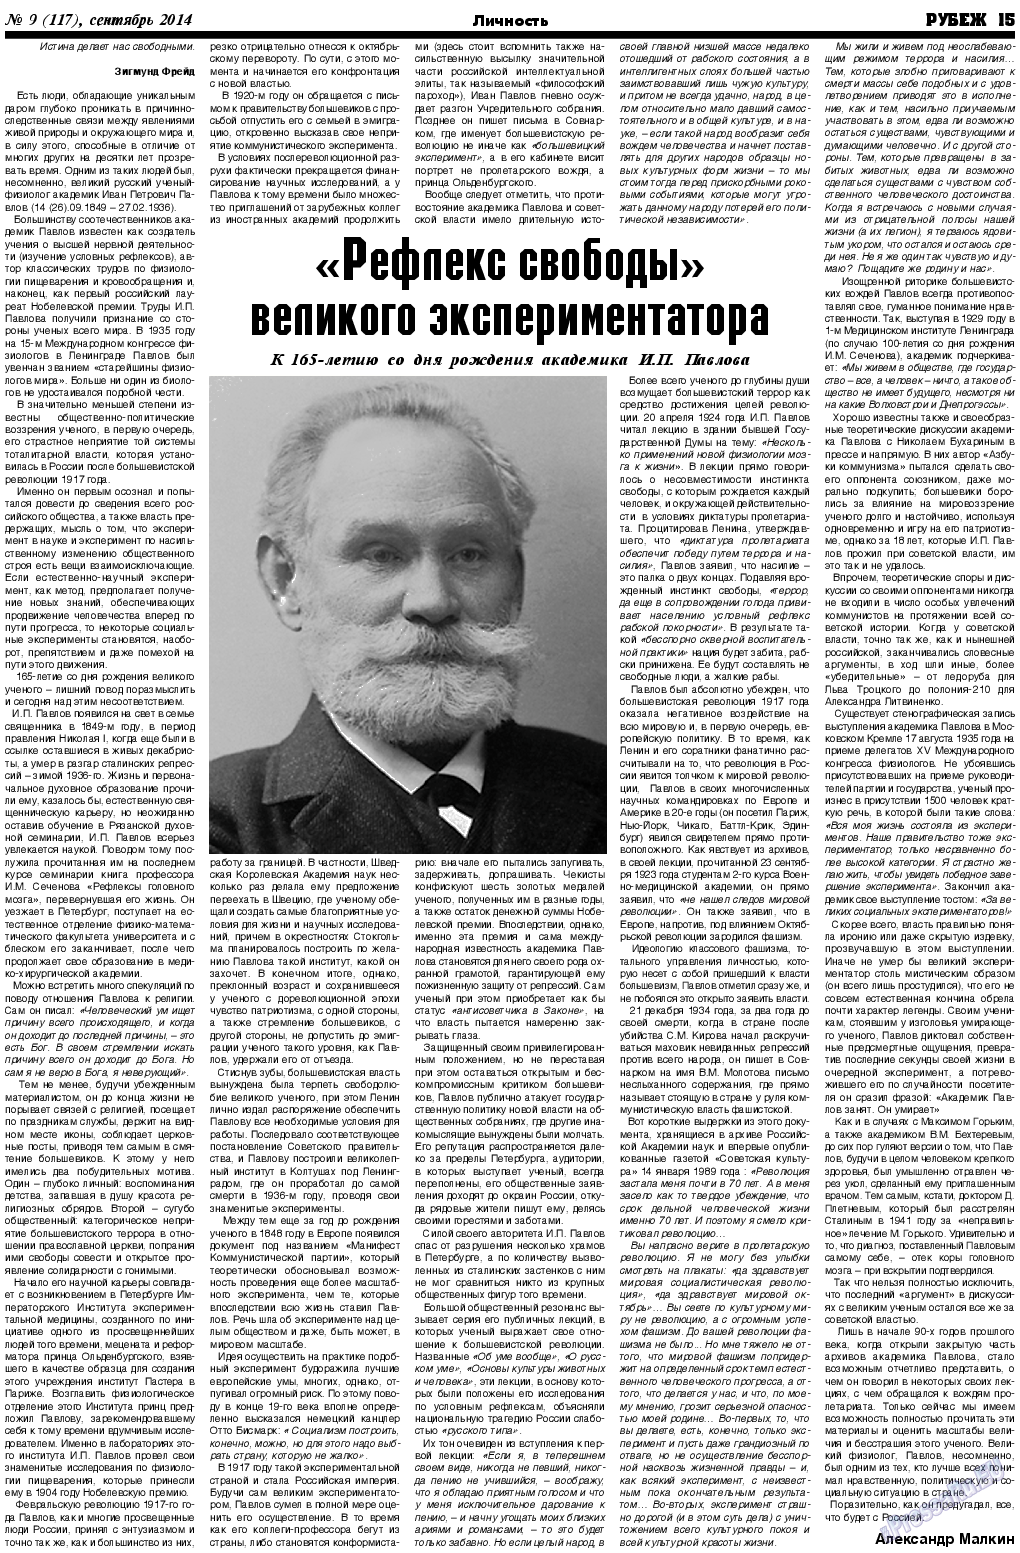 Рубеж, газета. 2014 №9 стр.15